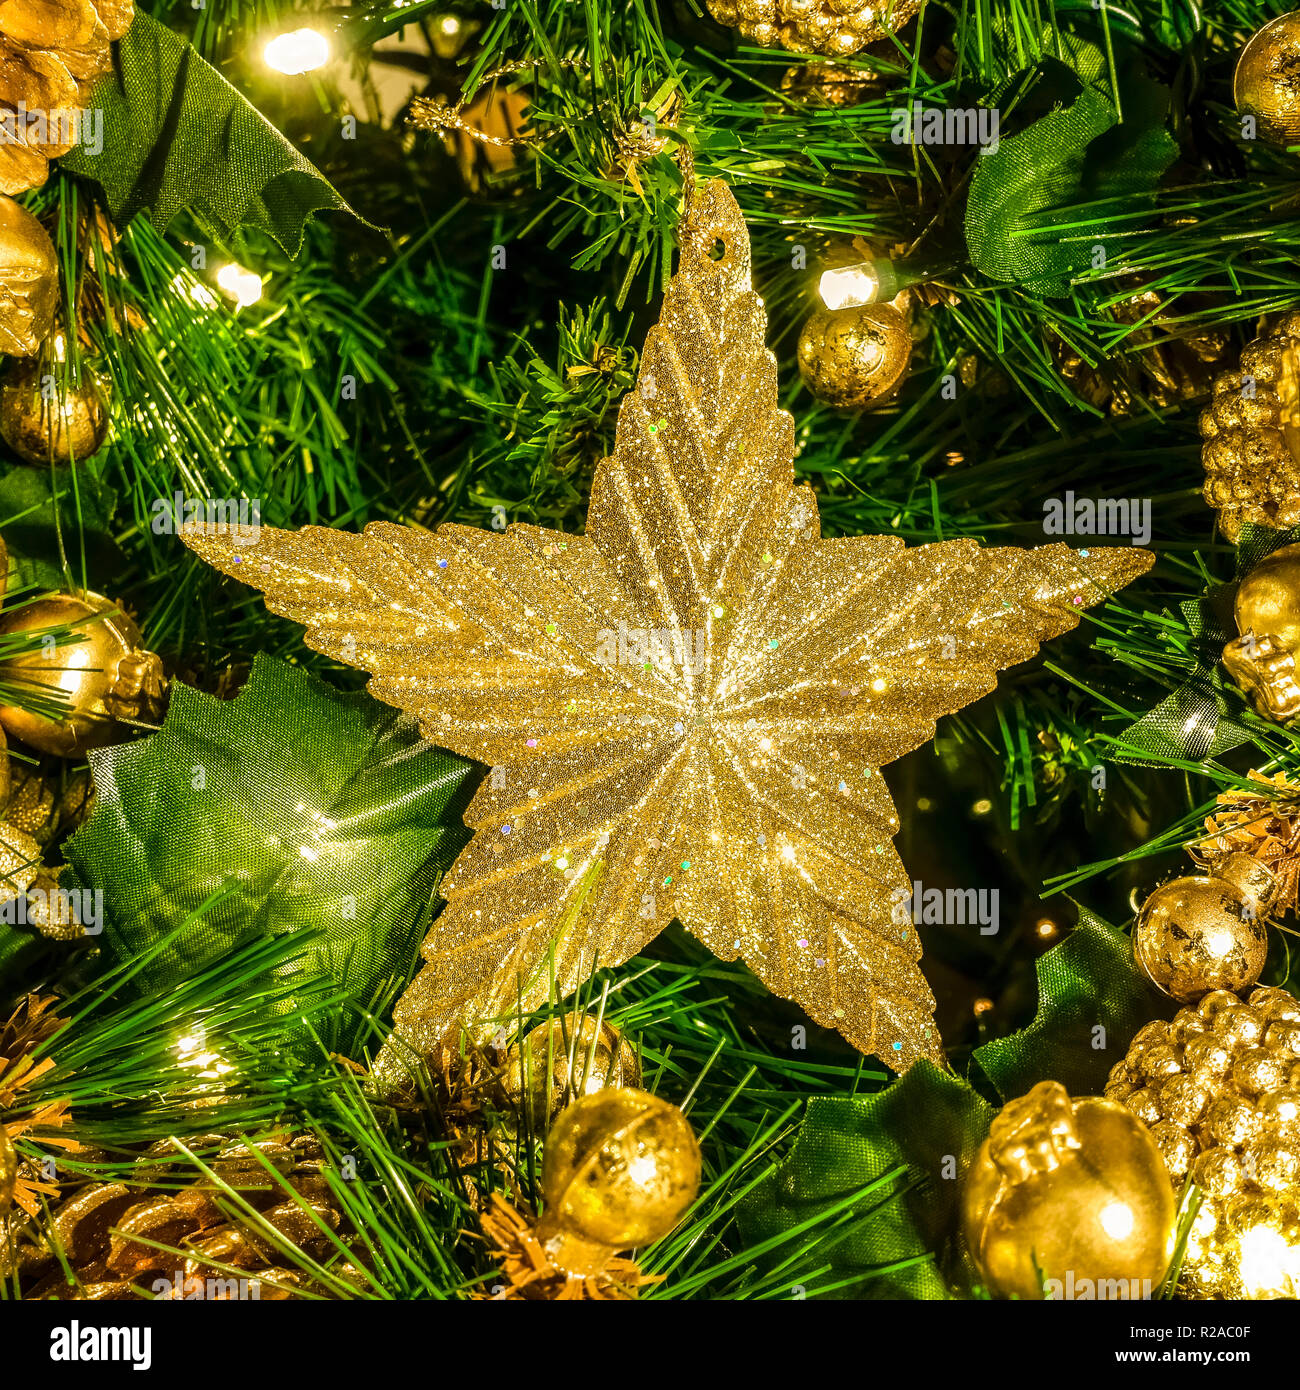 Golden star, christmas tree decorations. Christmas time festive ...